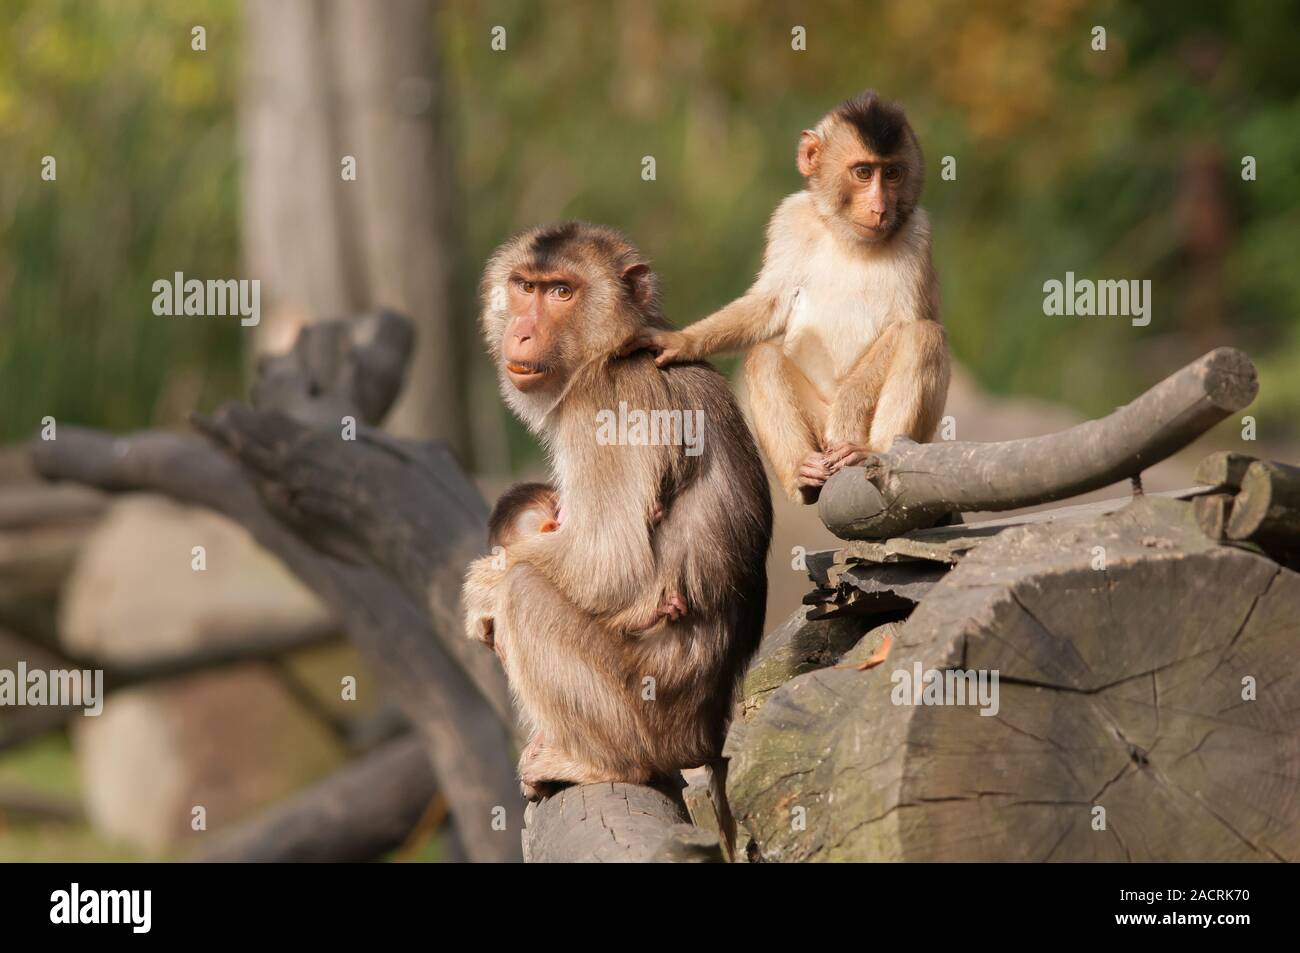 swine monkey Stock Photo